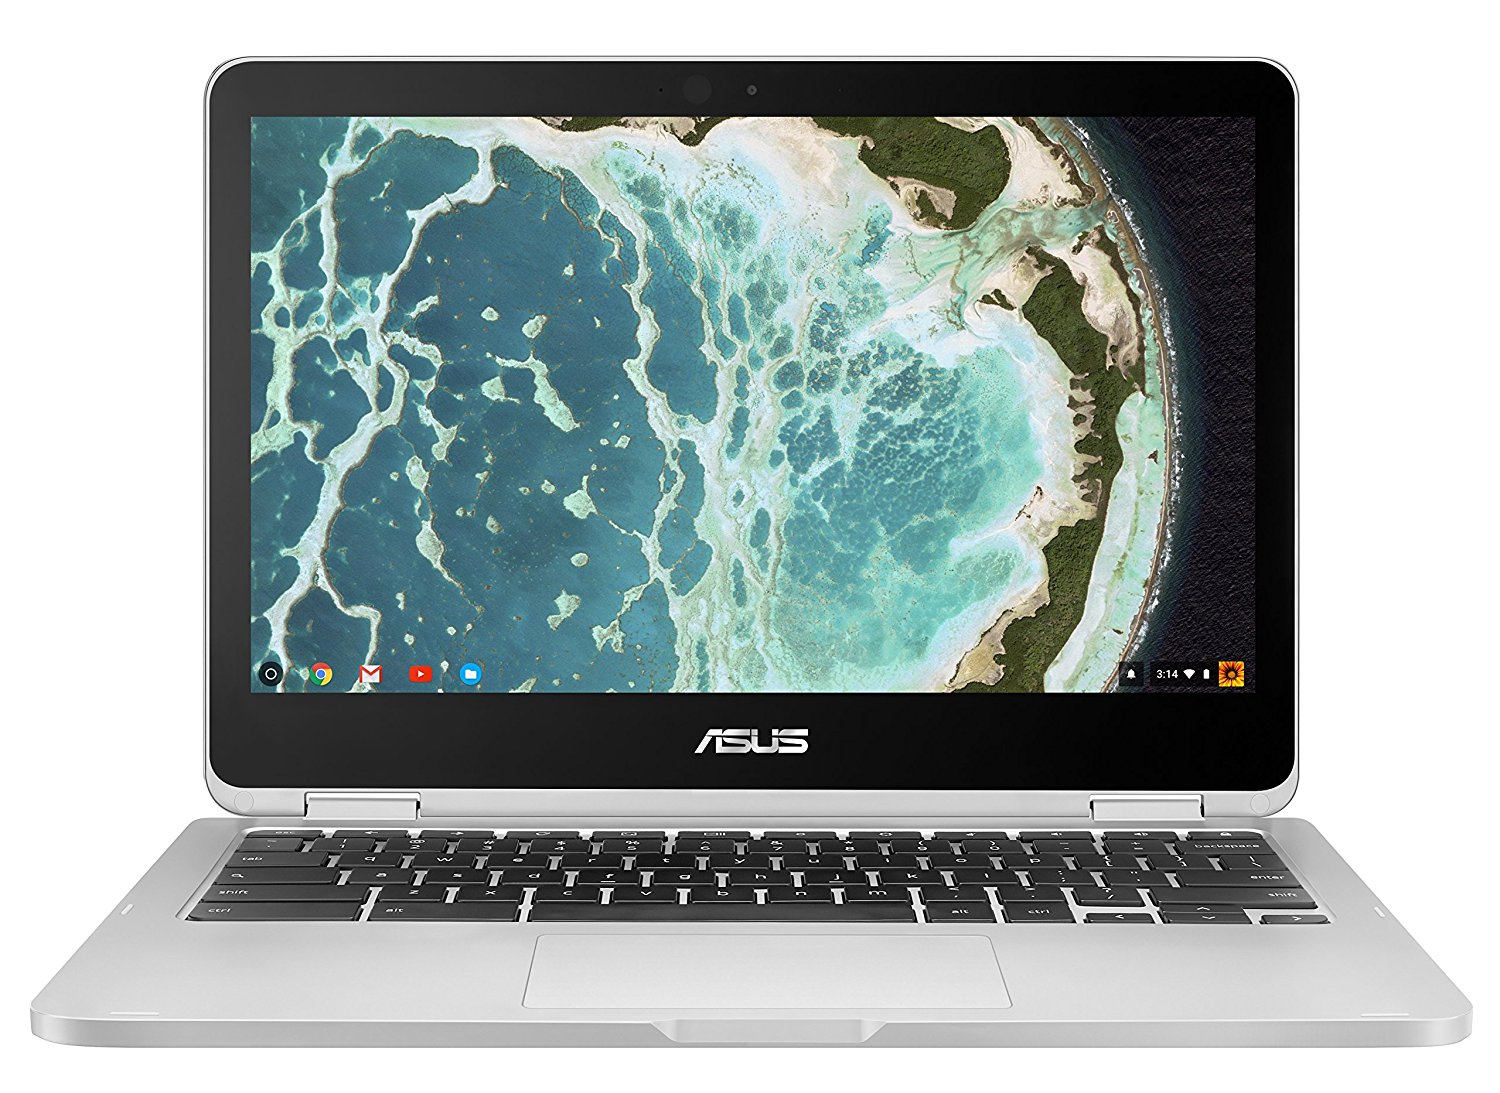 ASUS Chromebook Flip C302CA-DH54 12.5-inch Touchscreen Convertible